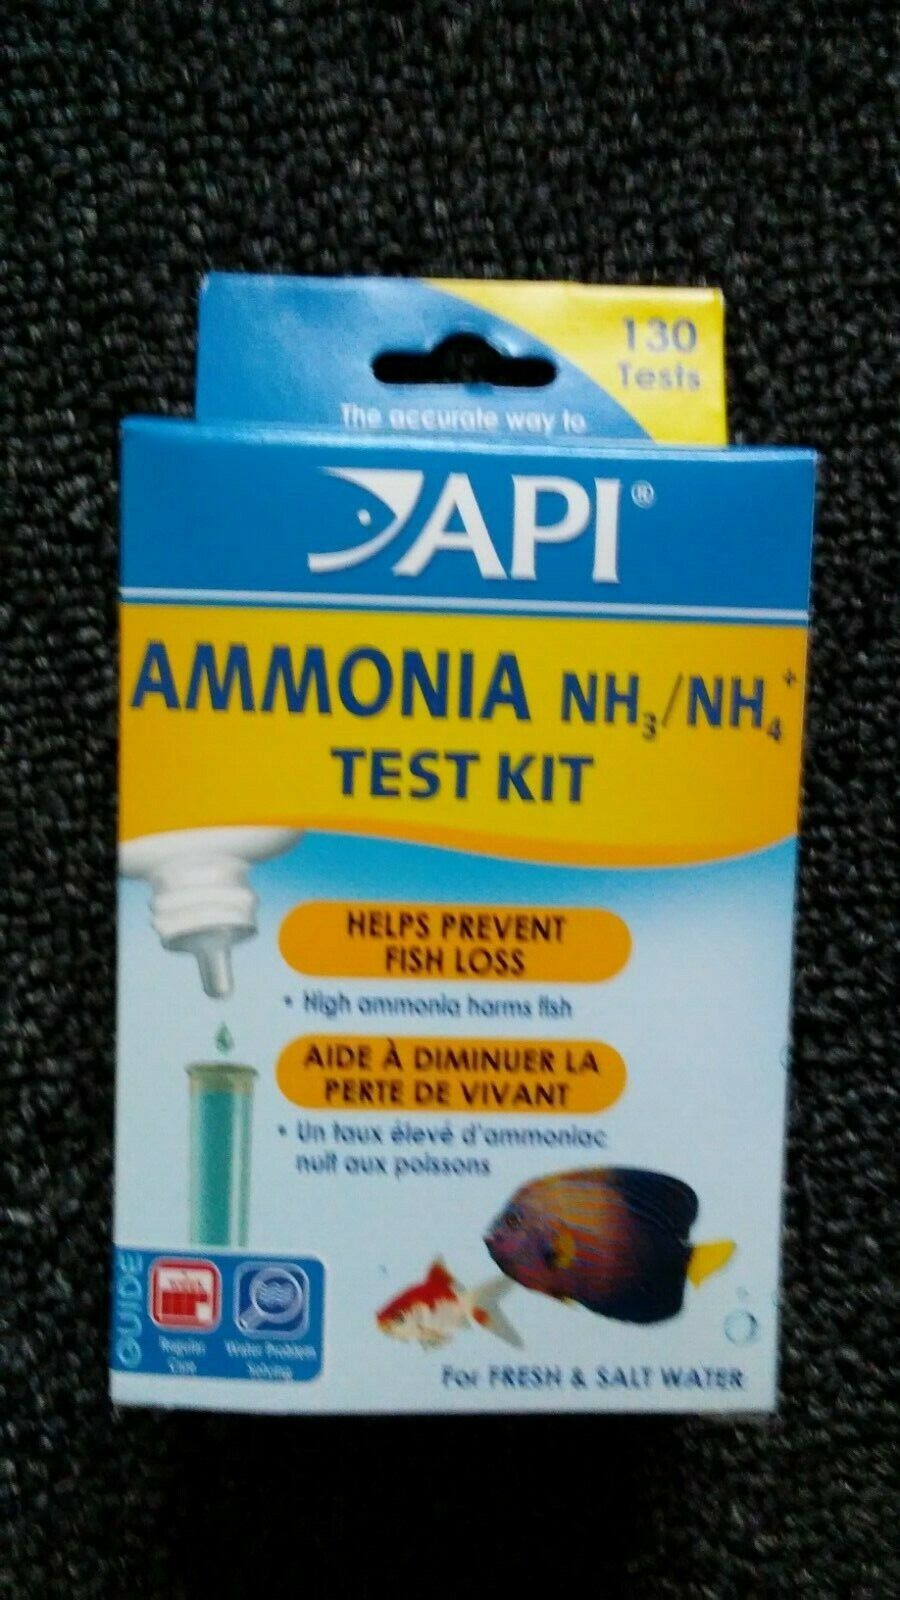 API Ammonia (NH3/NH4) Test Kit - Monitoring Ammonia Helps Prevent Fish Loss